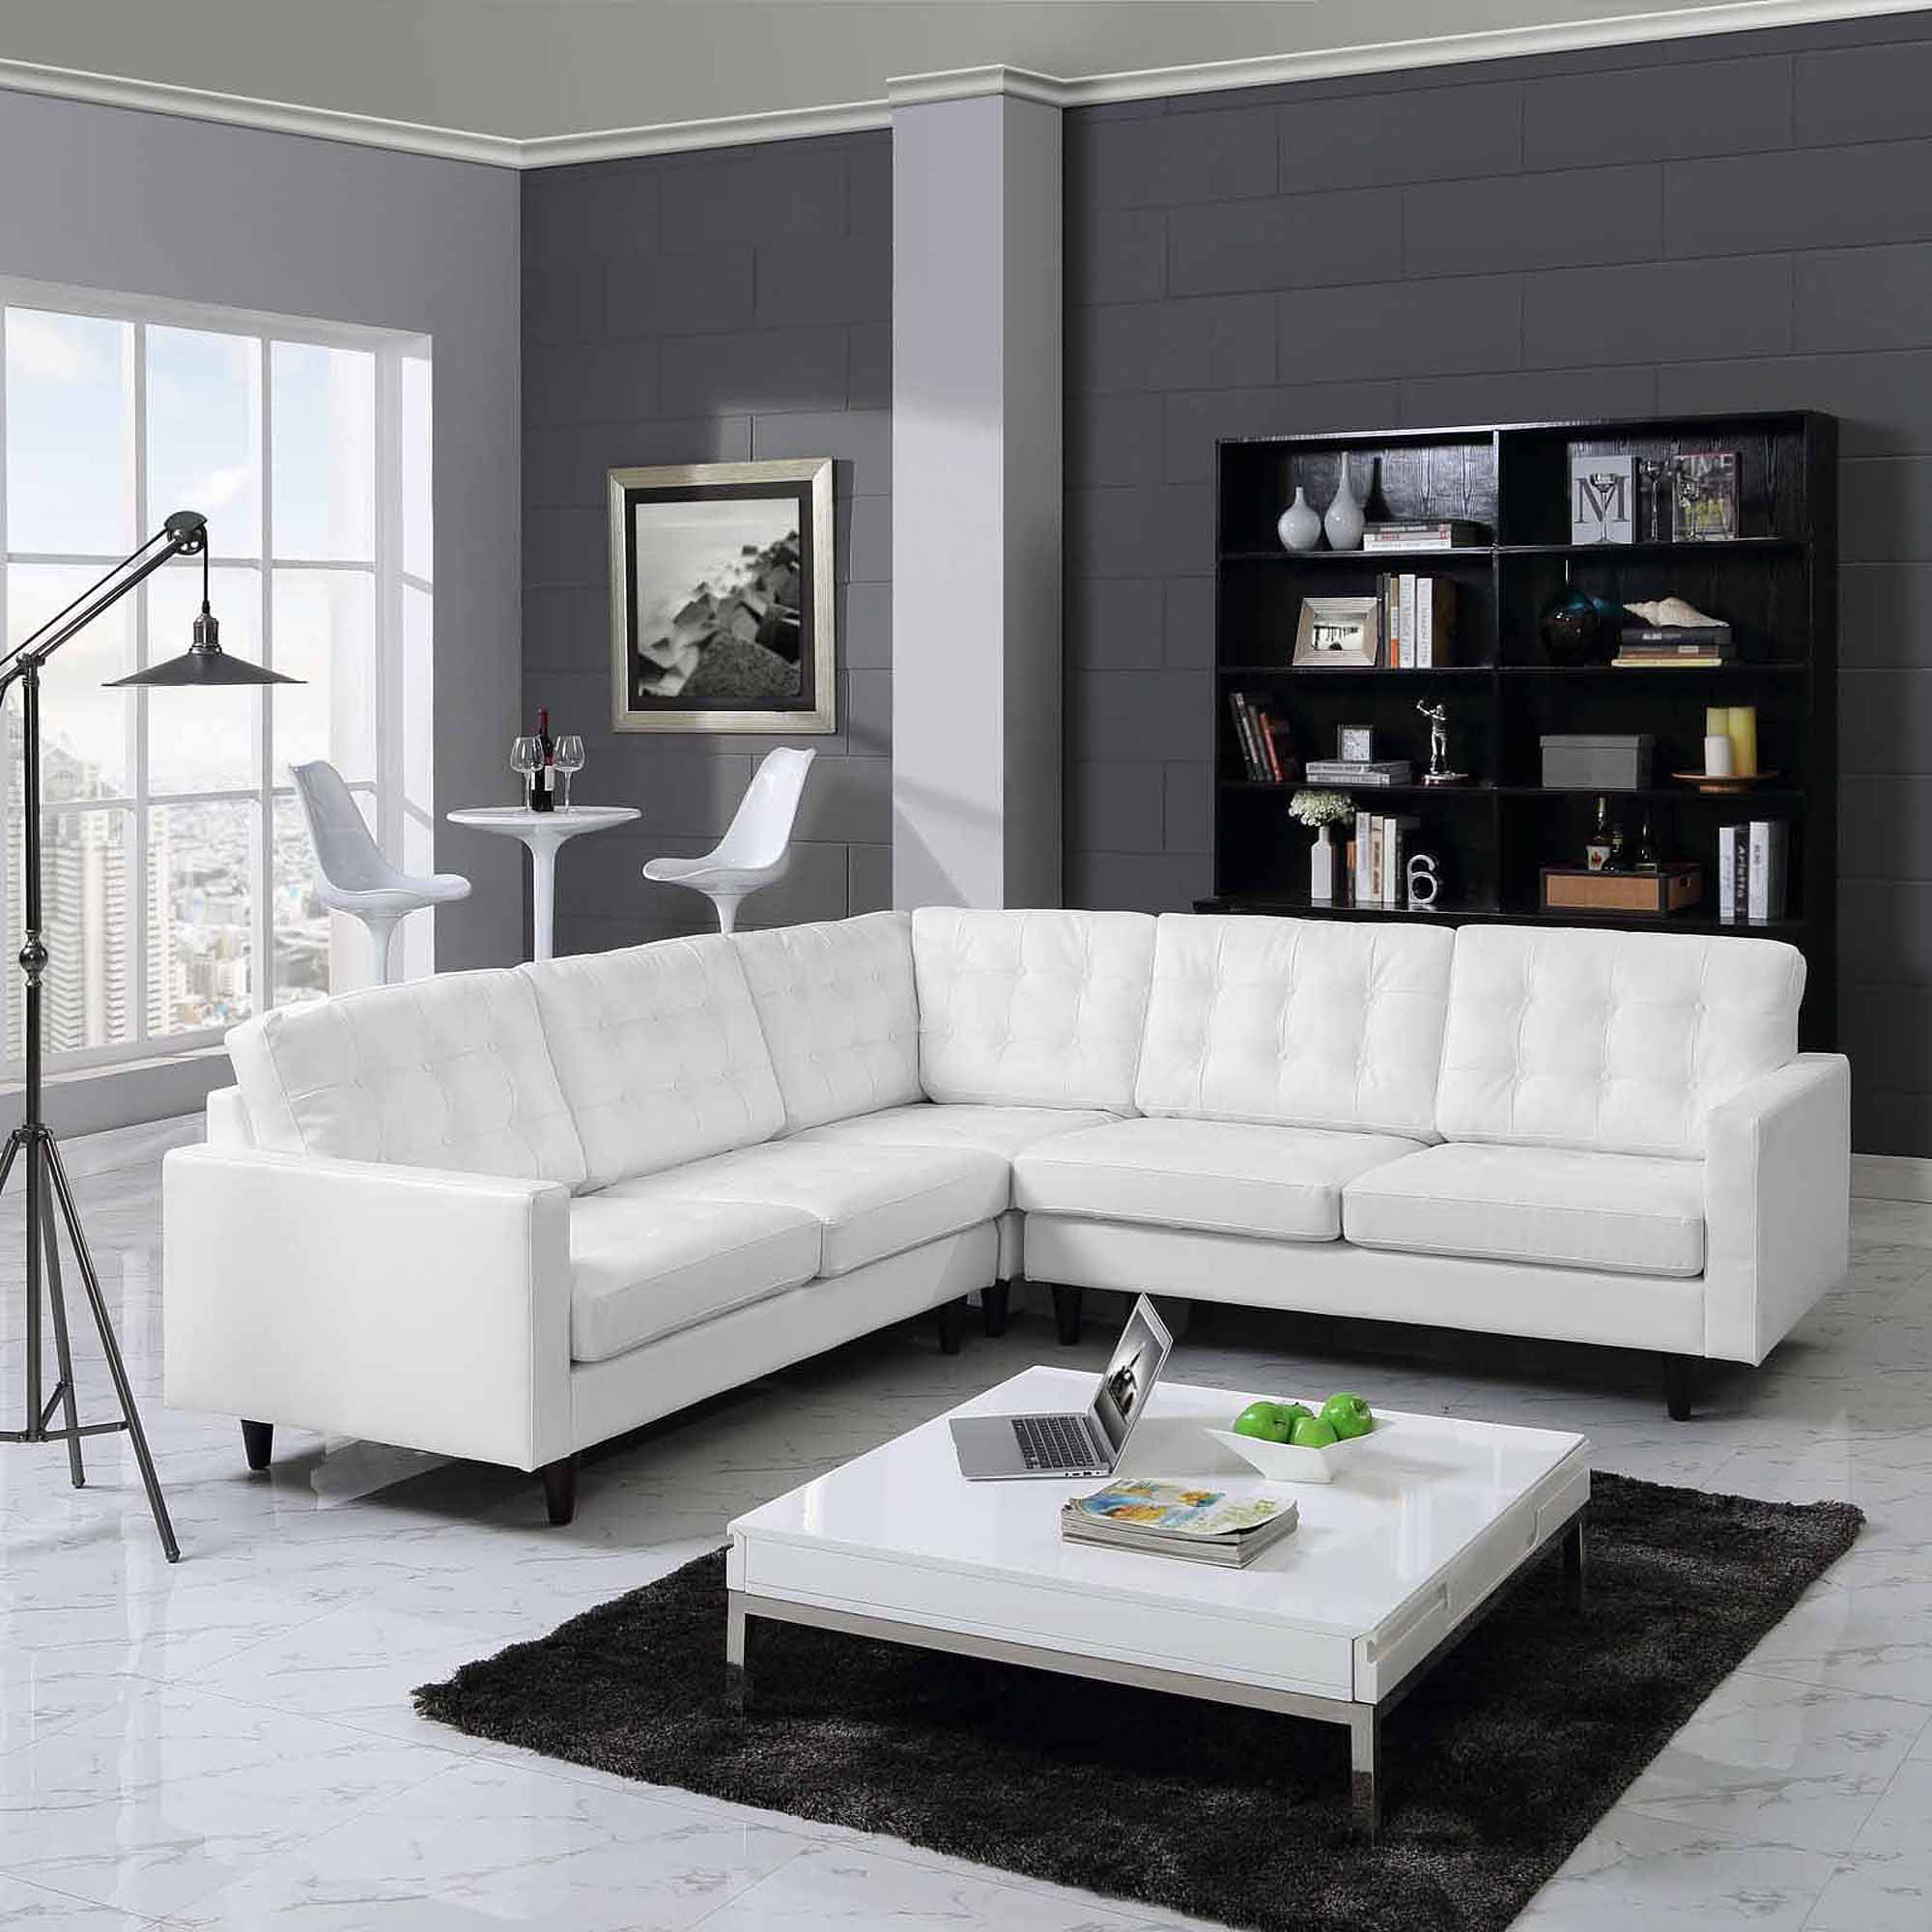 Modway Empress 3 Piece Leather Sectional Sofa Set Multiple Colors